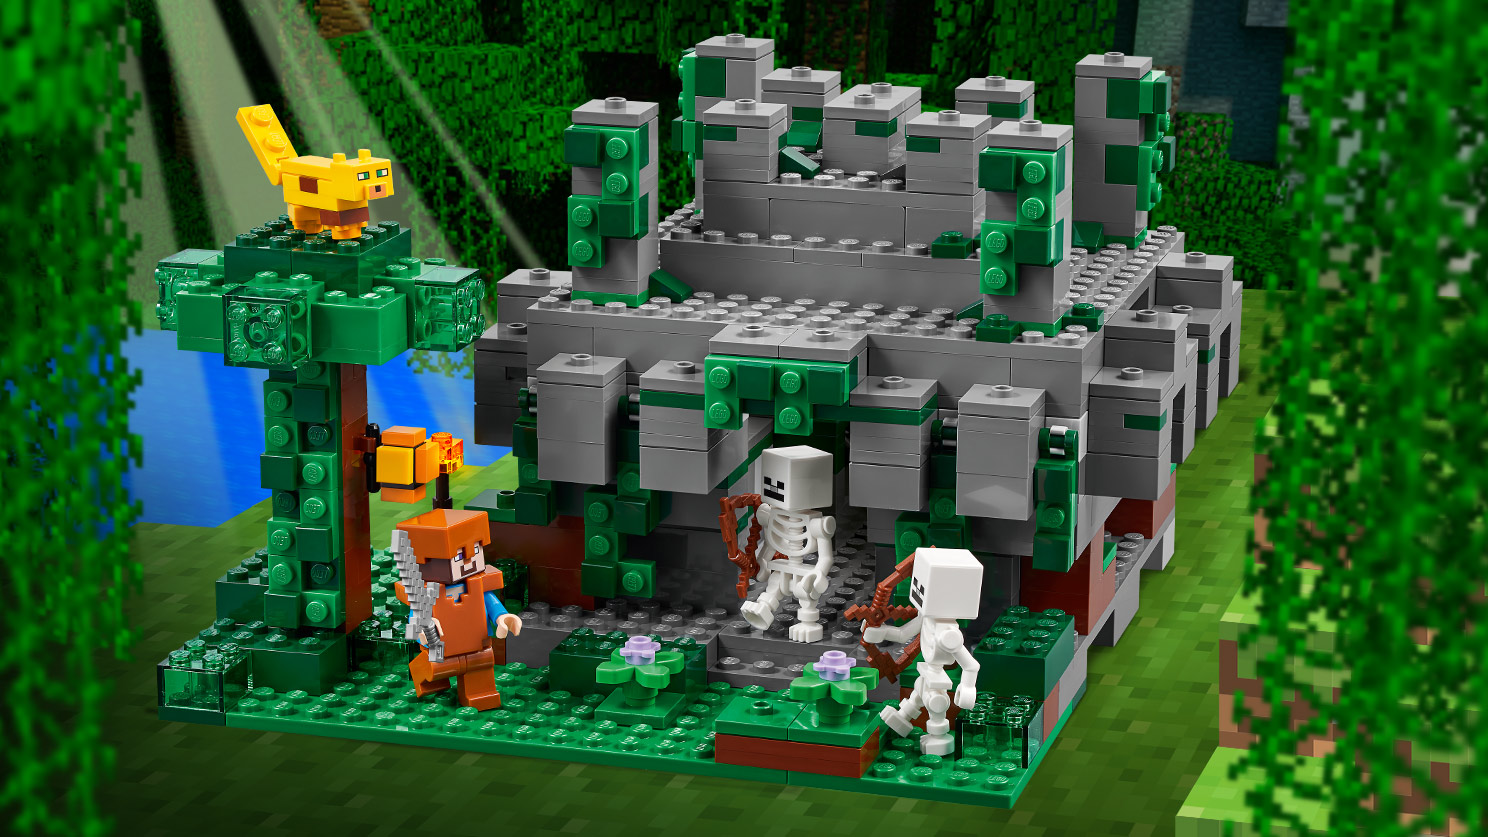 The Jungle Temple 21132 - LEGO® Minecraft™ Sets - LEGO.com for kids